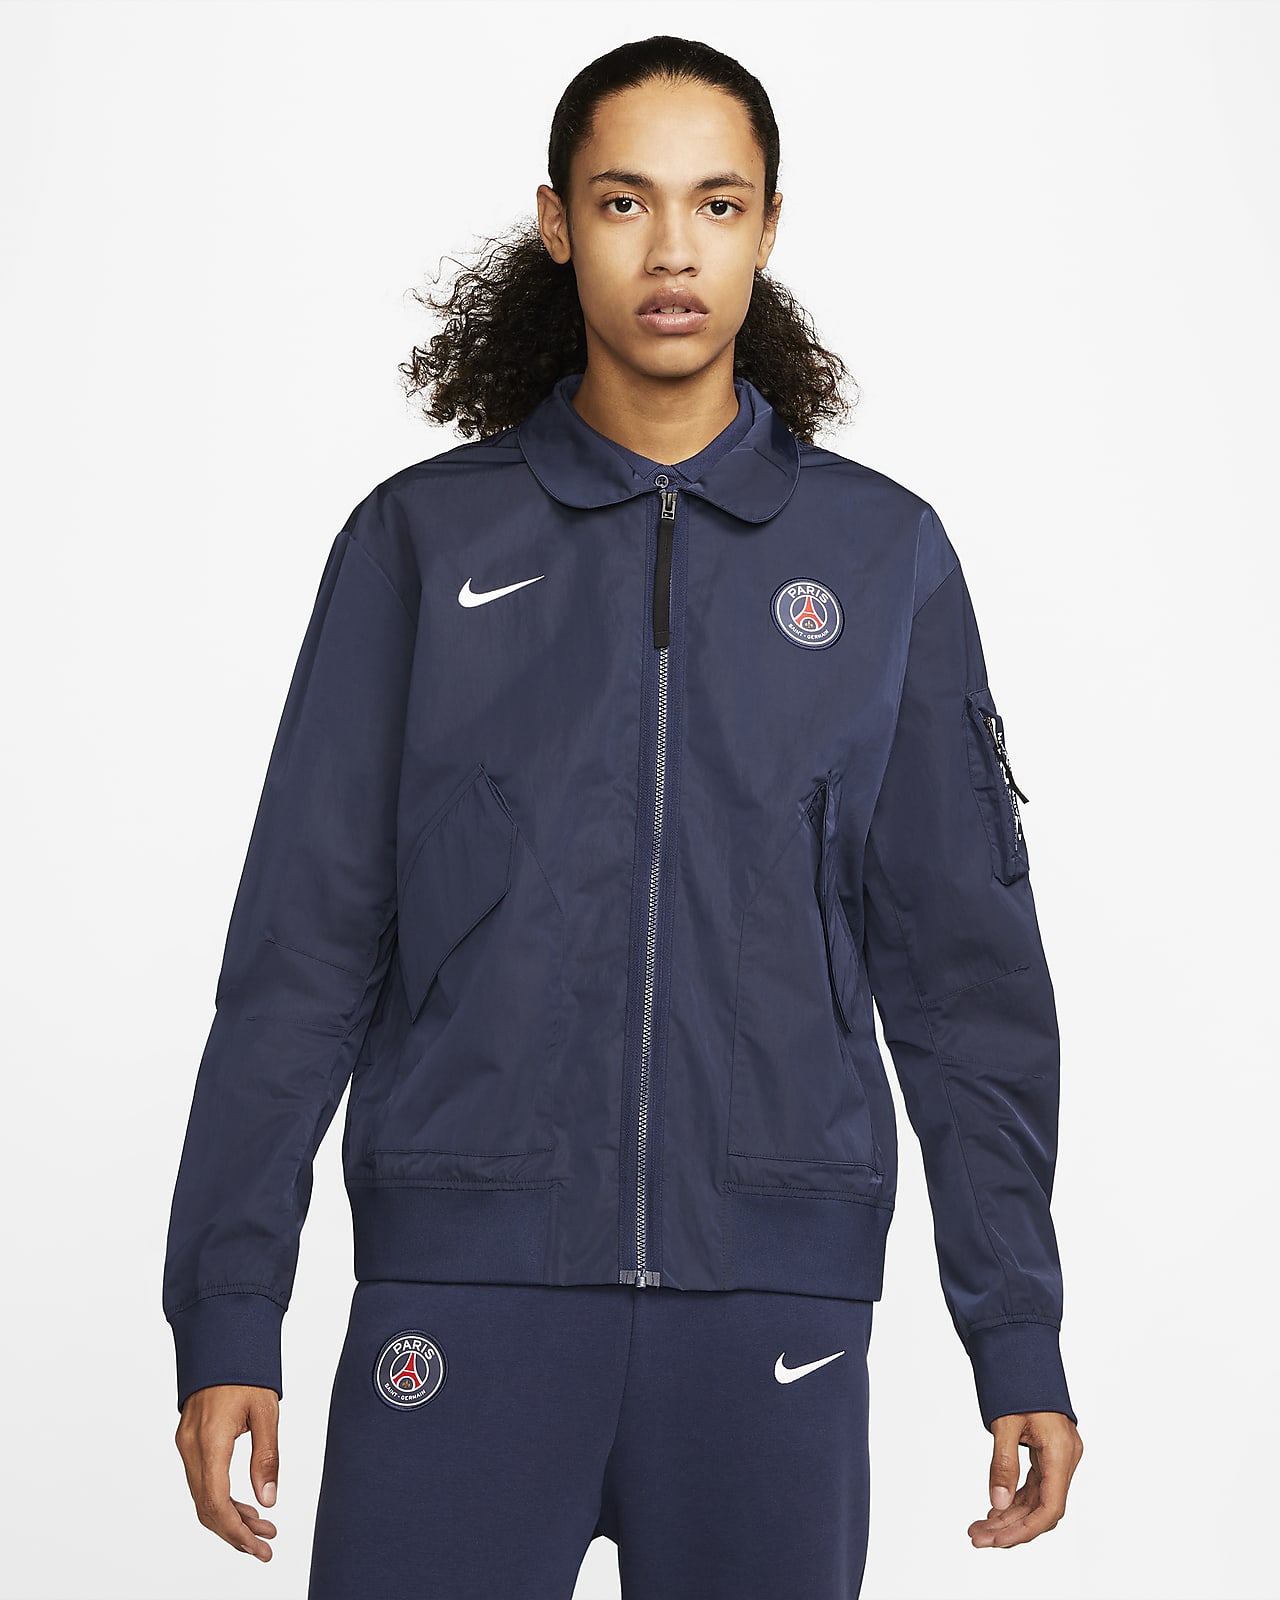 Paris Saint-Germain Men's Bomber Jacket. Nike